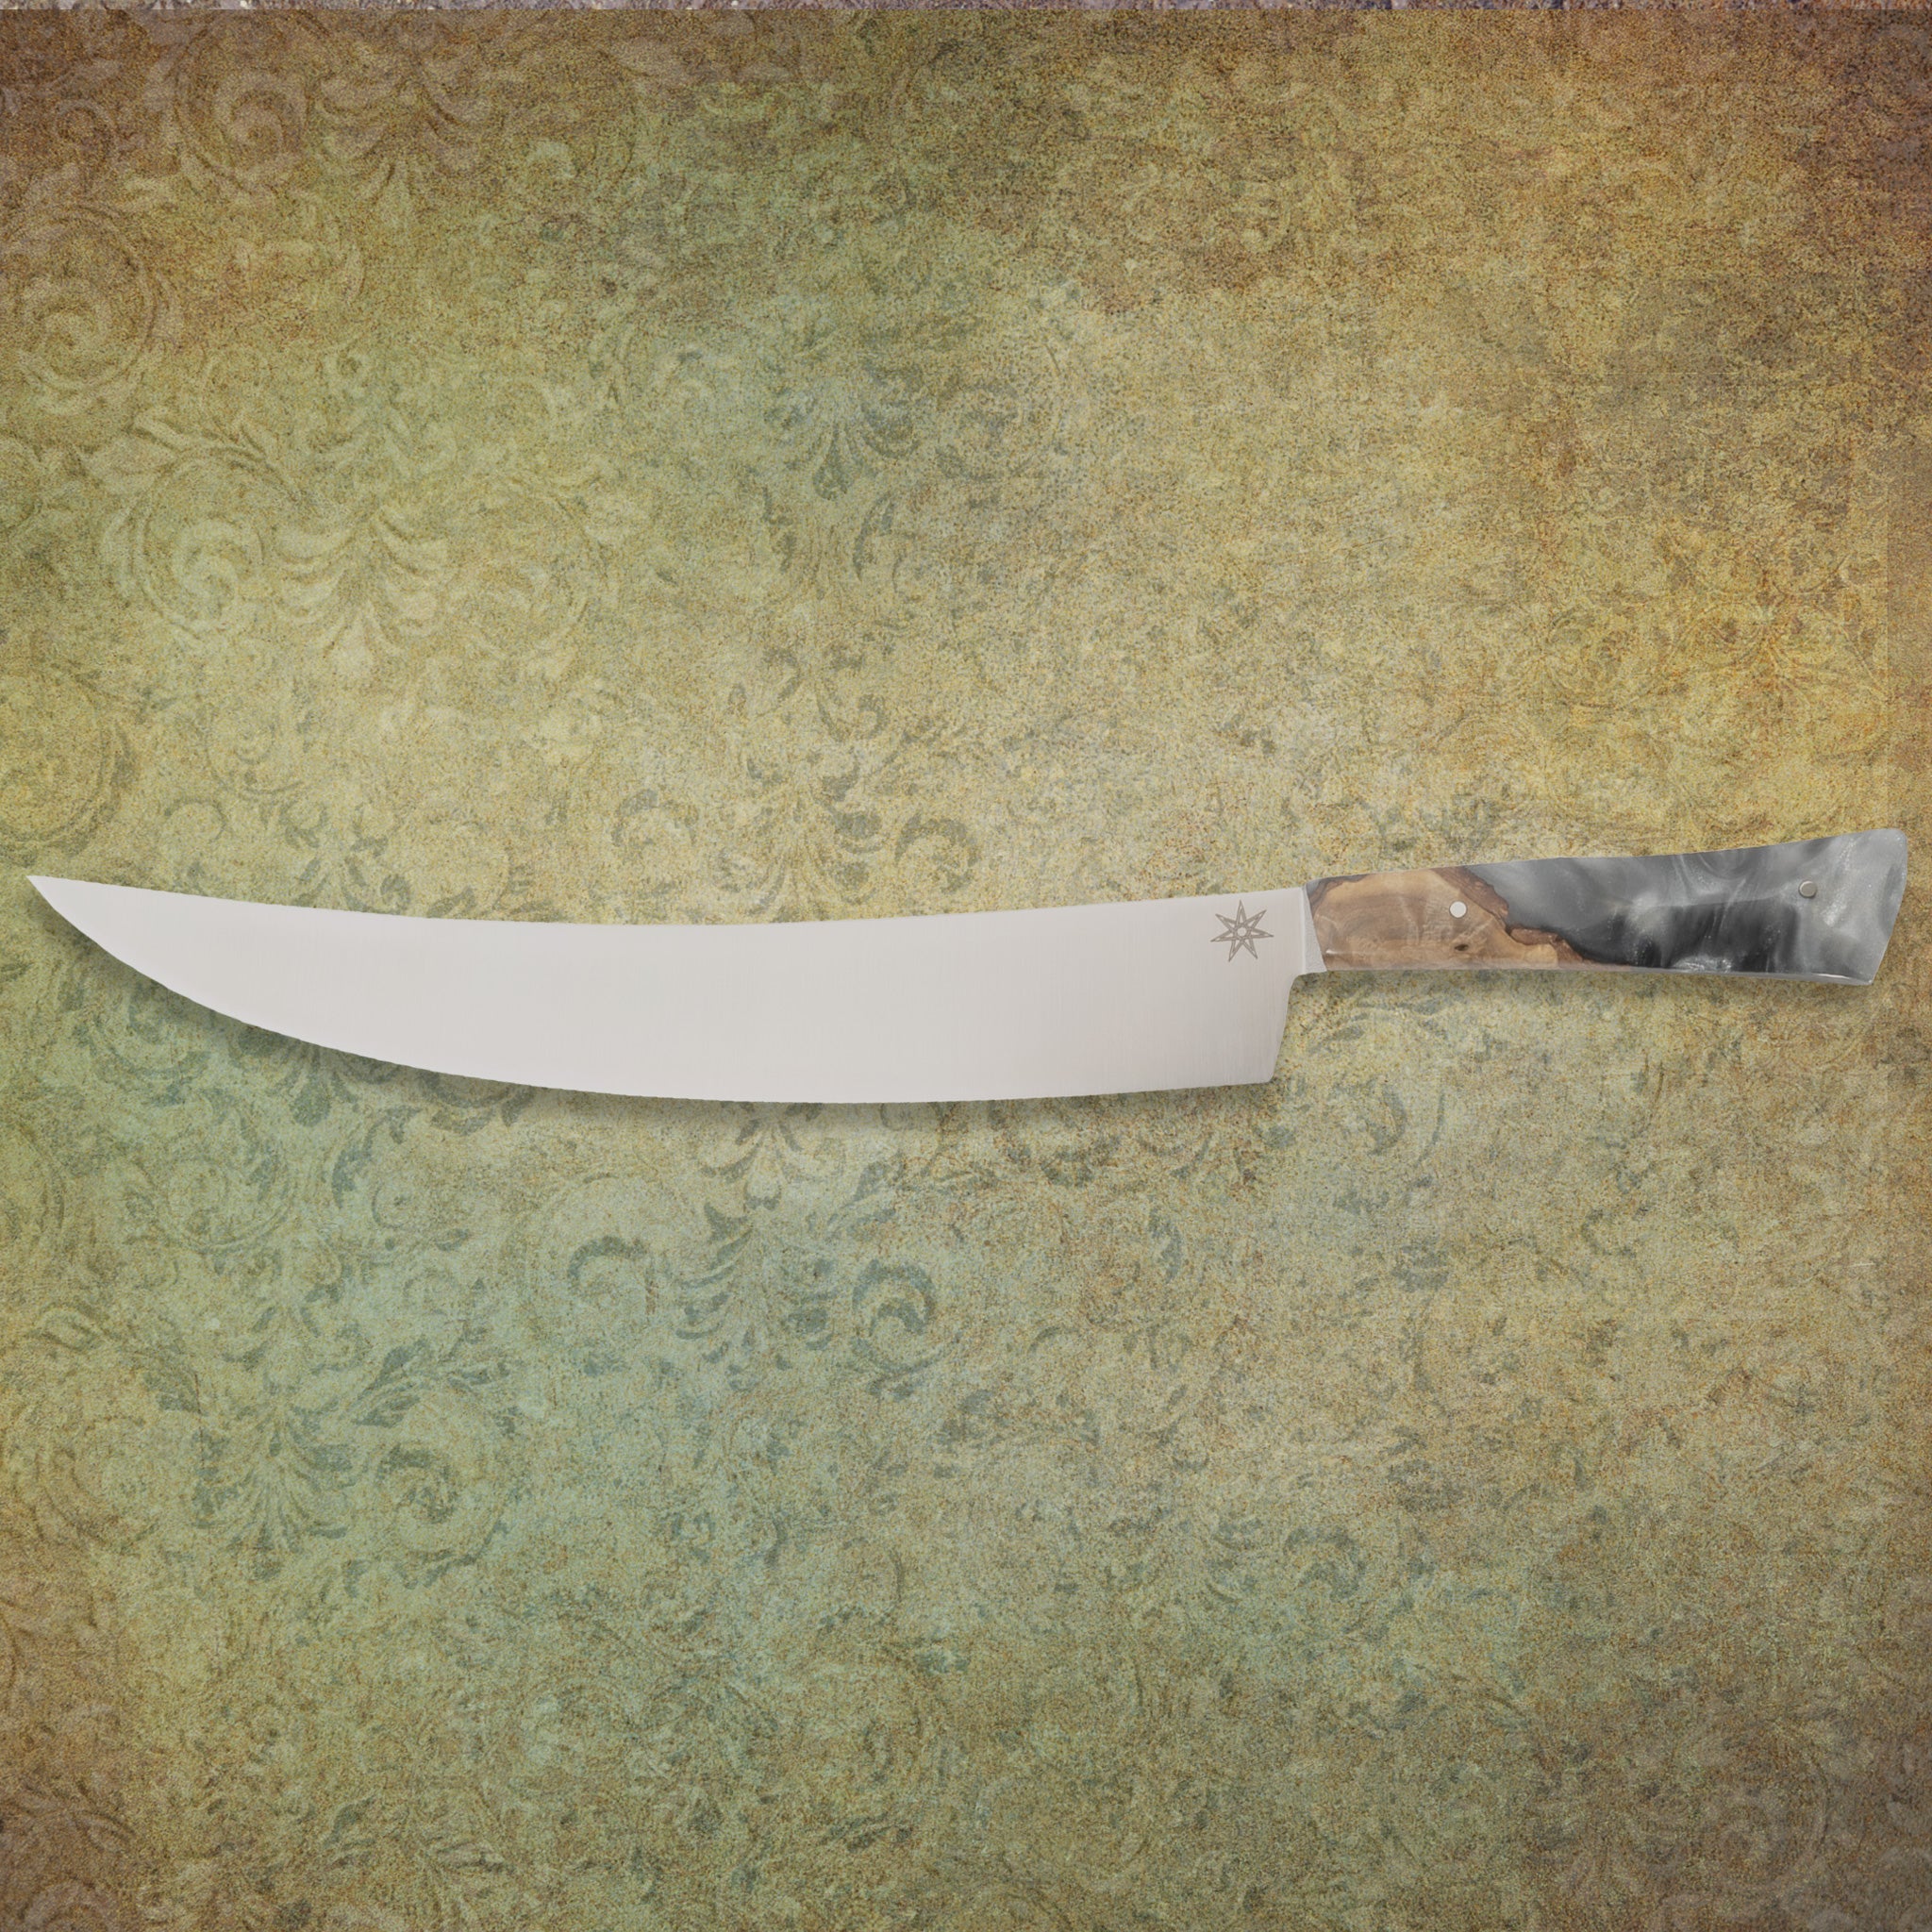 Town Cutler Scimitar Butcher Knife from Ag 47 Knife Line